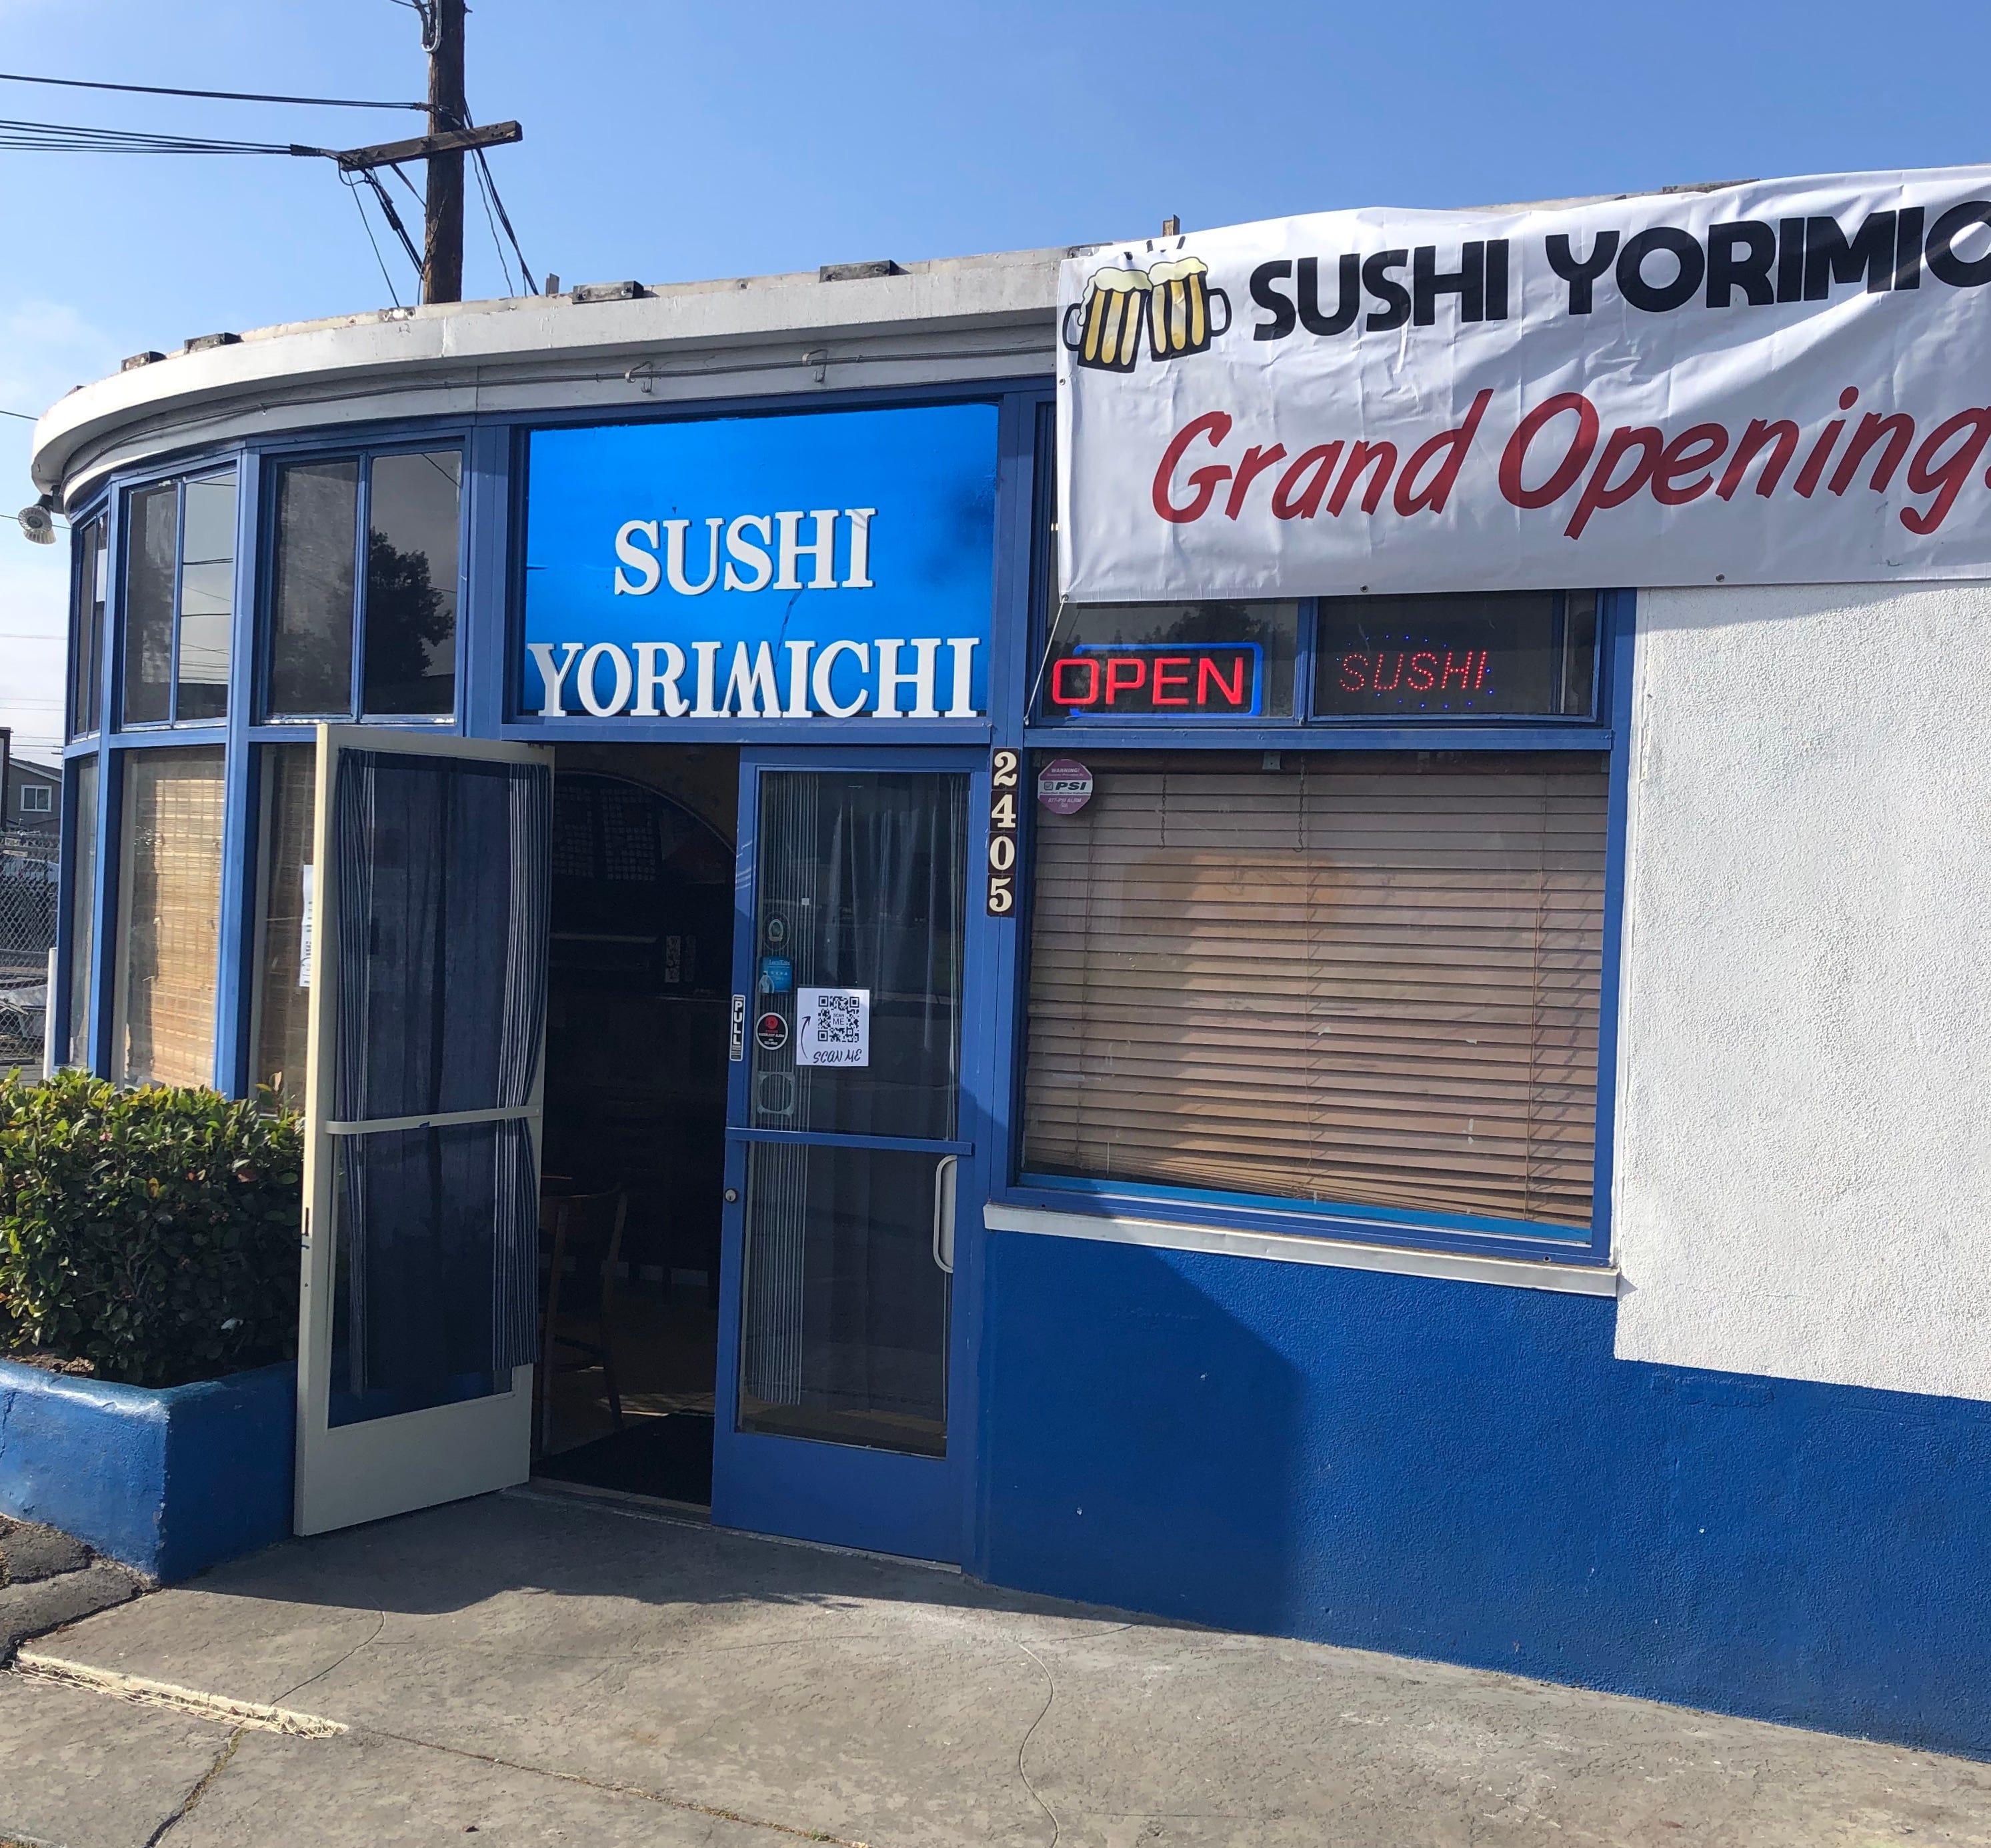 Sushi yorimichi